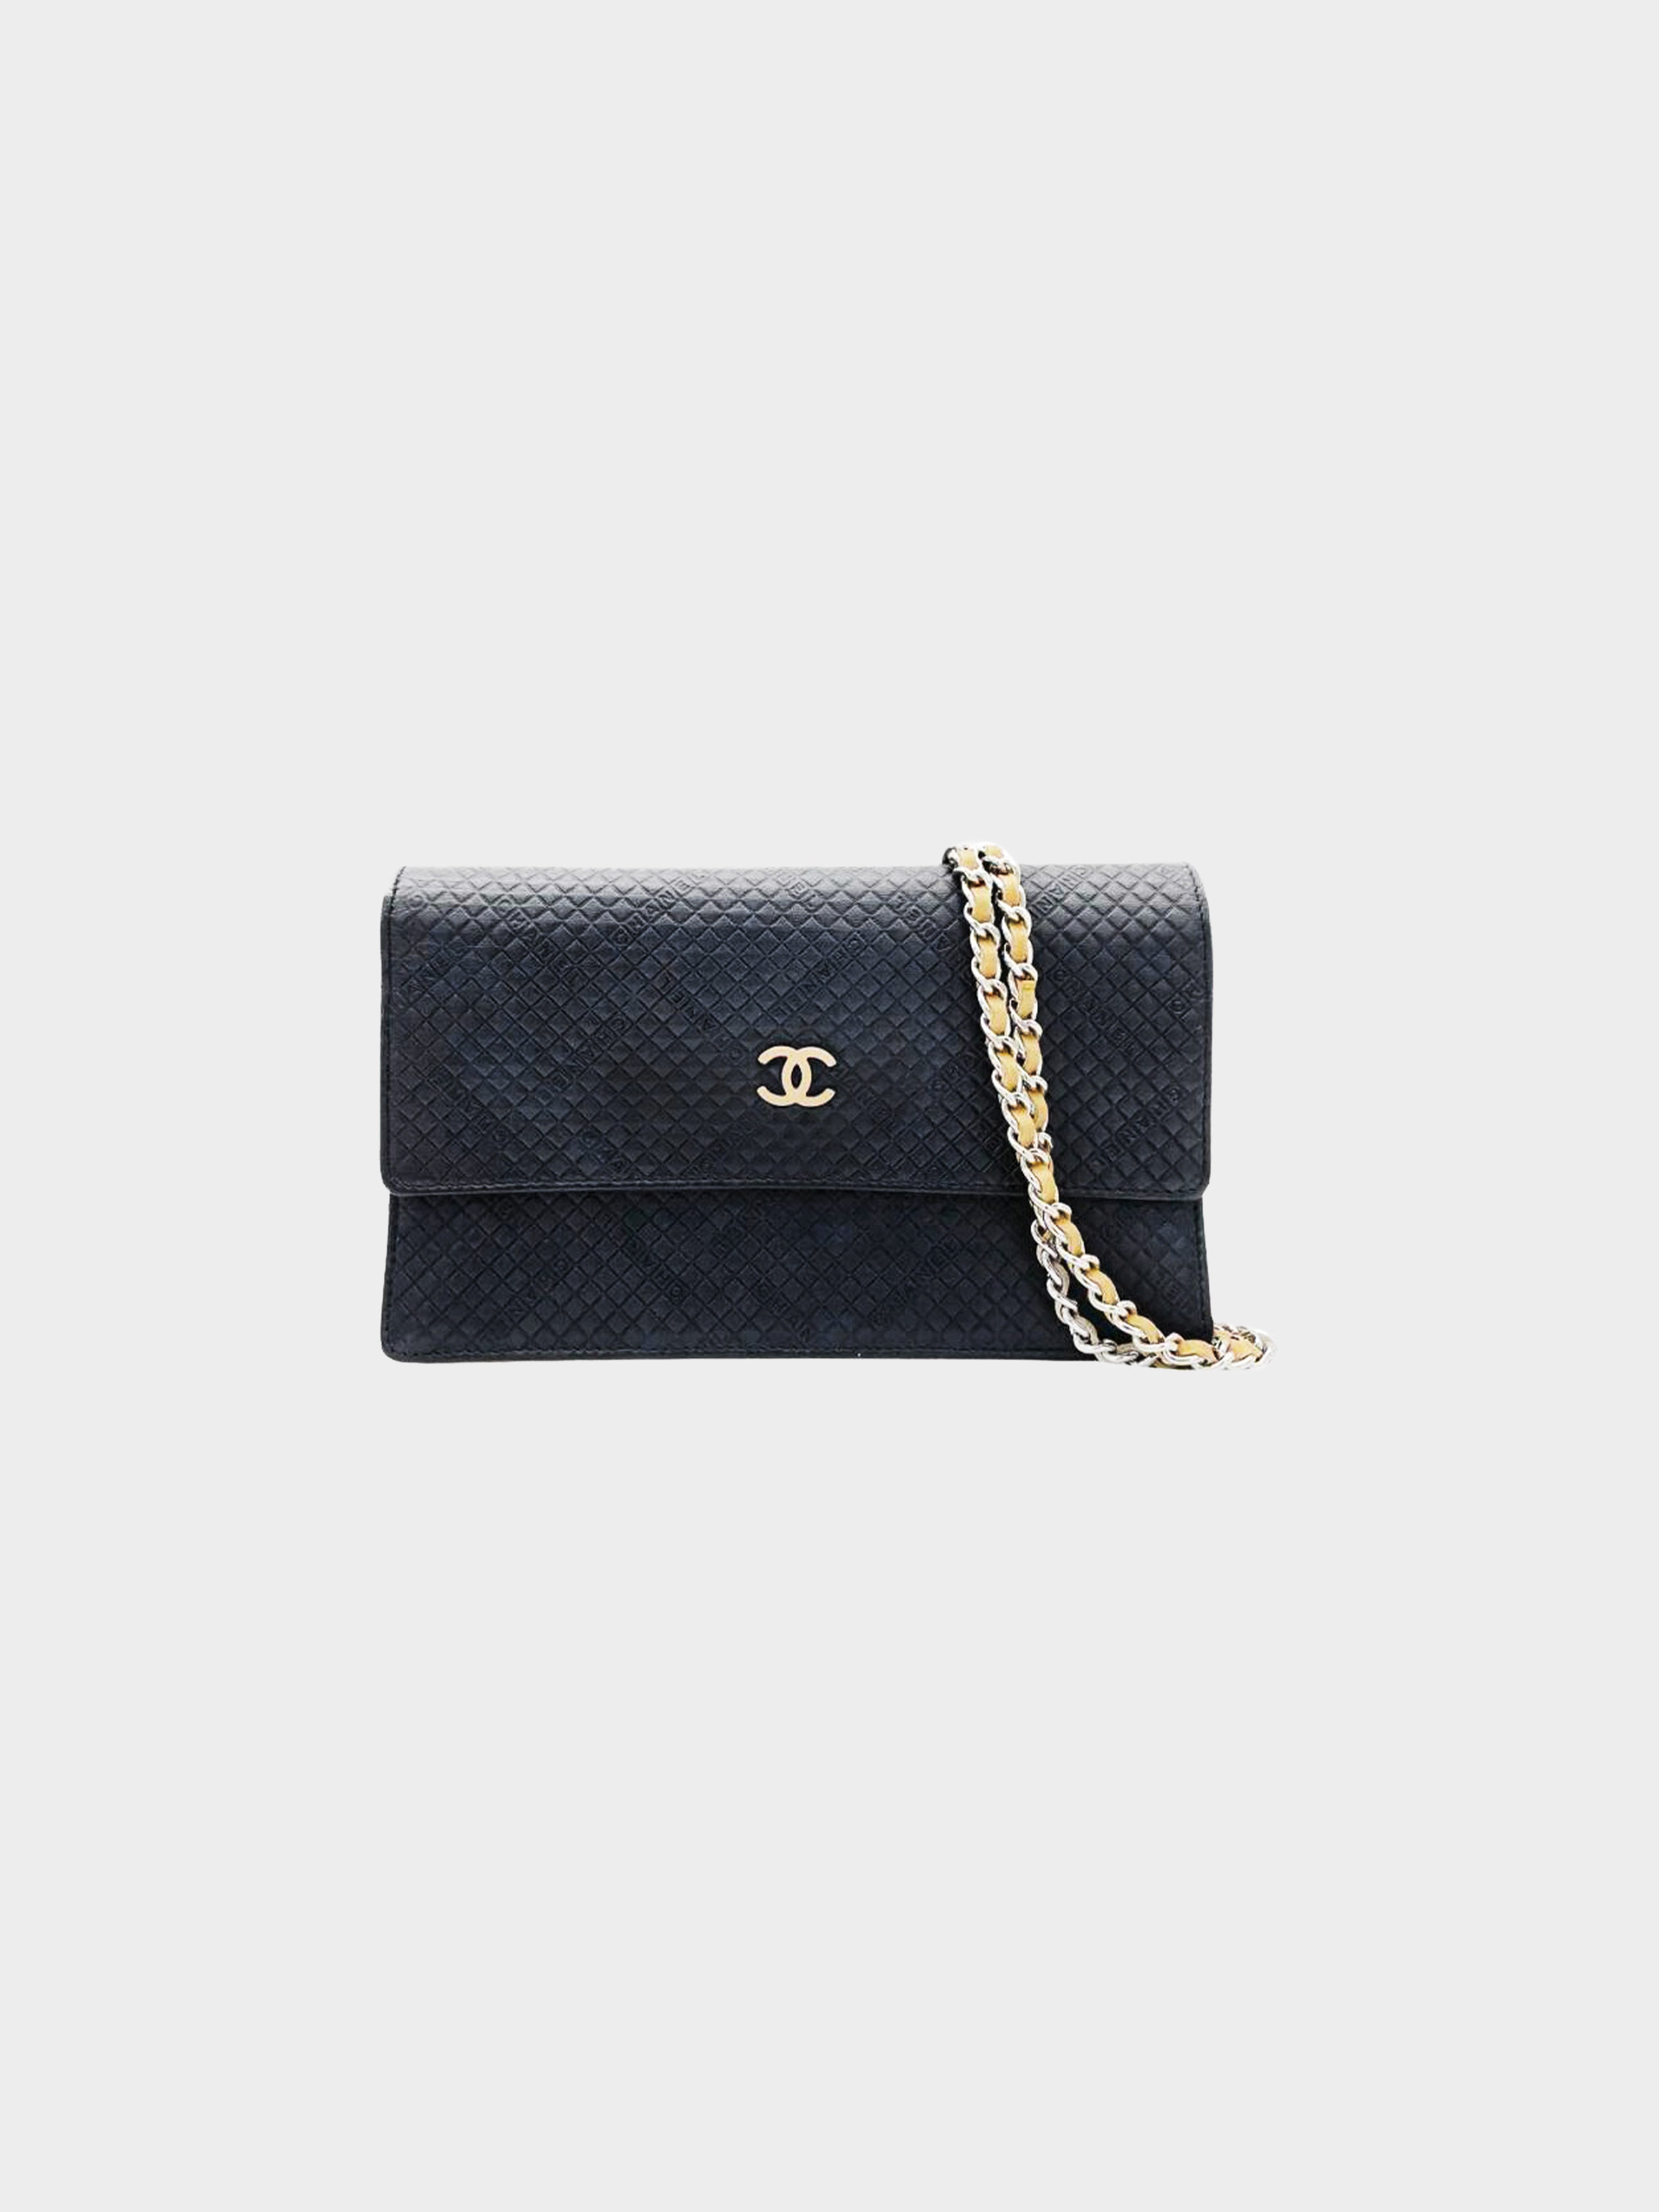 Chanel 2010s Blue Leather Trimmed Rare Handbag · INTO